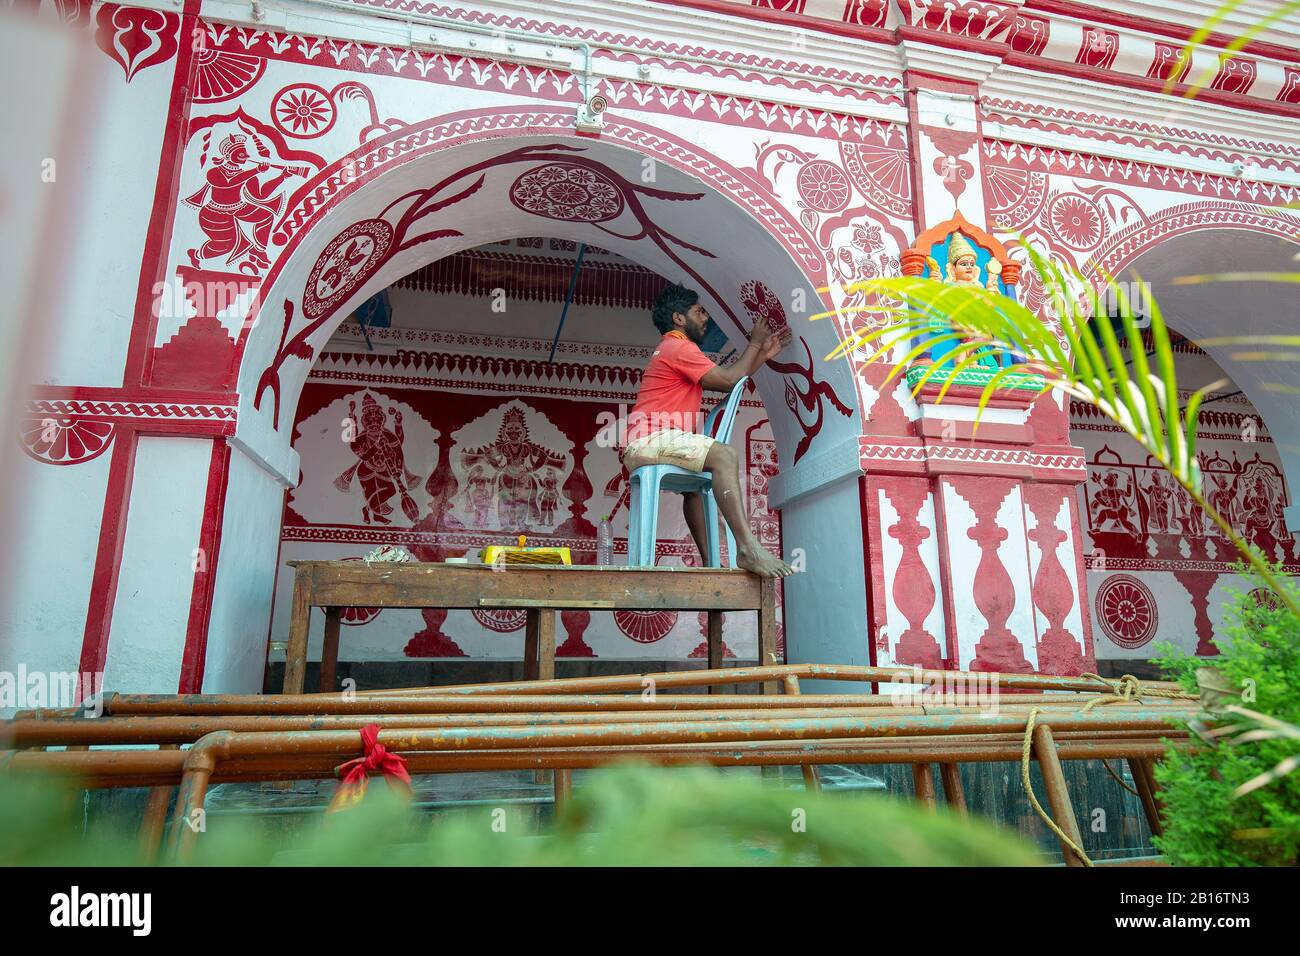 20.02.2019 Sirsi, Indien. Künstler malt einen Tempel in Indien - Innenhof des tempels hri Maarikamba. Stockfoto